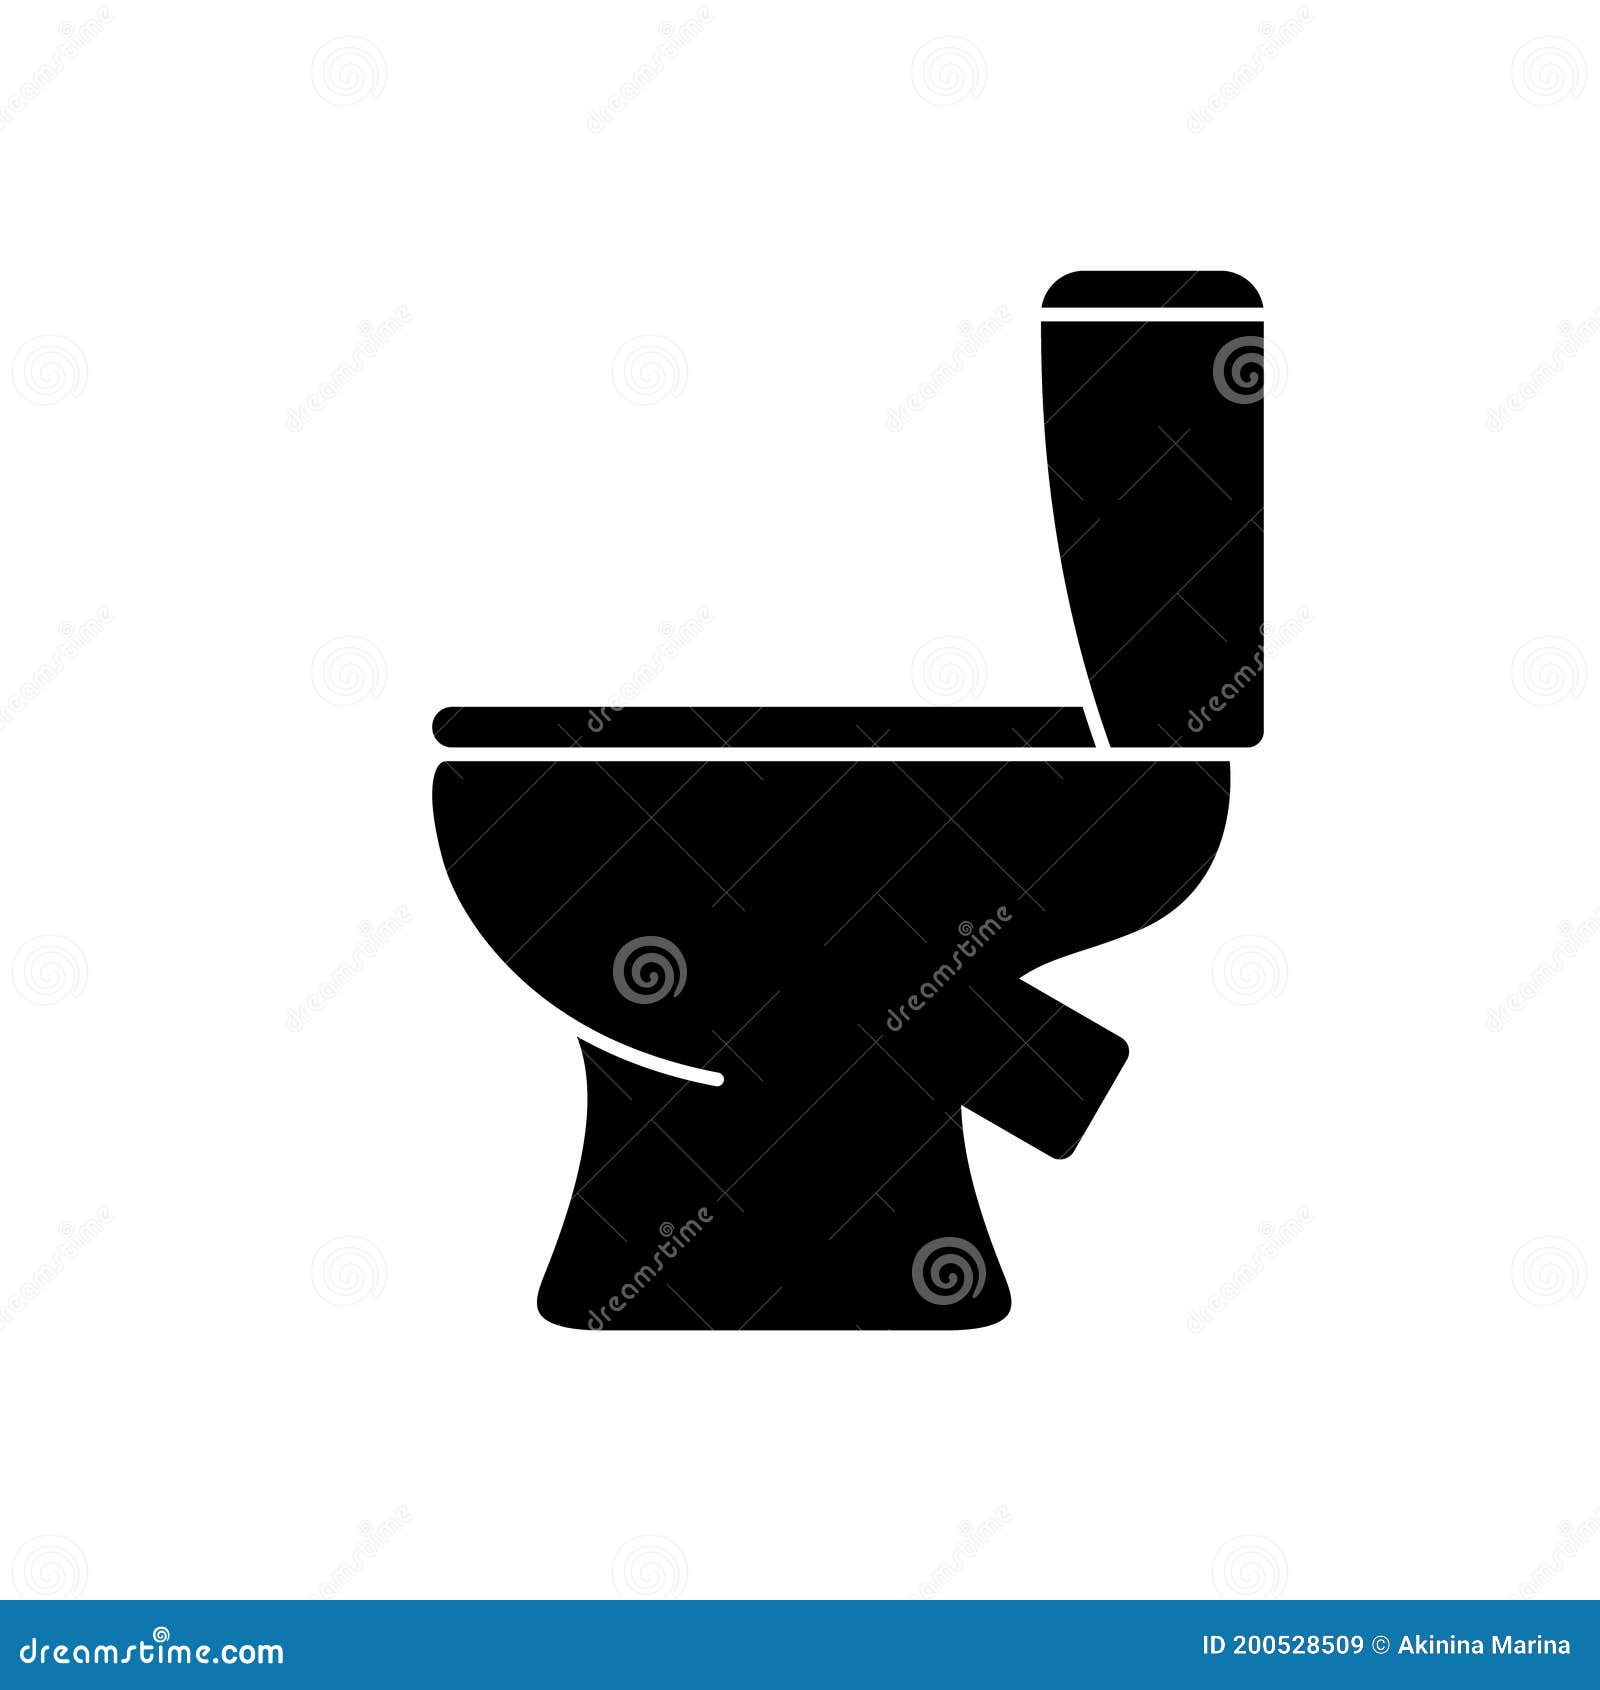 ik ga akkoord met lijden levend Toilet Silhouette. Outline Icon of Ceramic Sanitary Ware for Bathroom.  Black Simple Illustration Stock Vector - Illustration of vector, drawing:  200528509